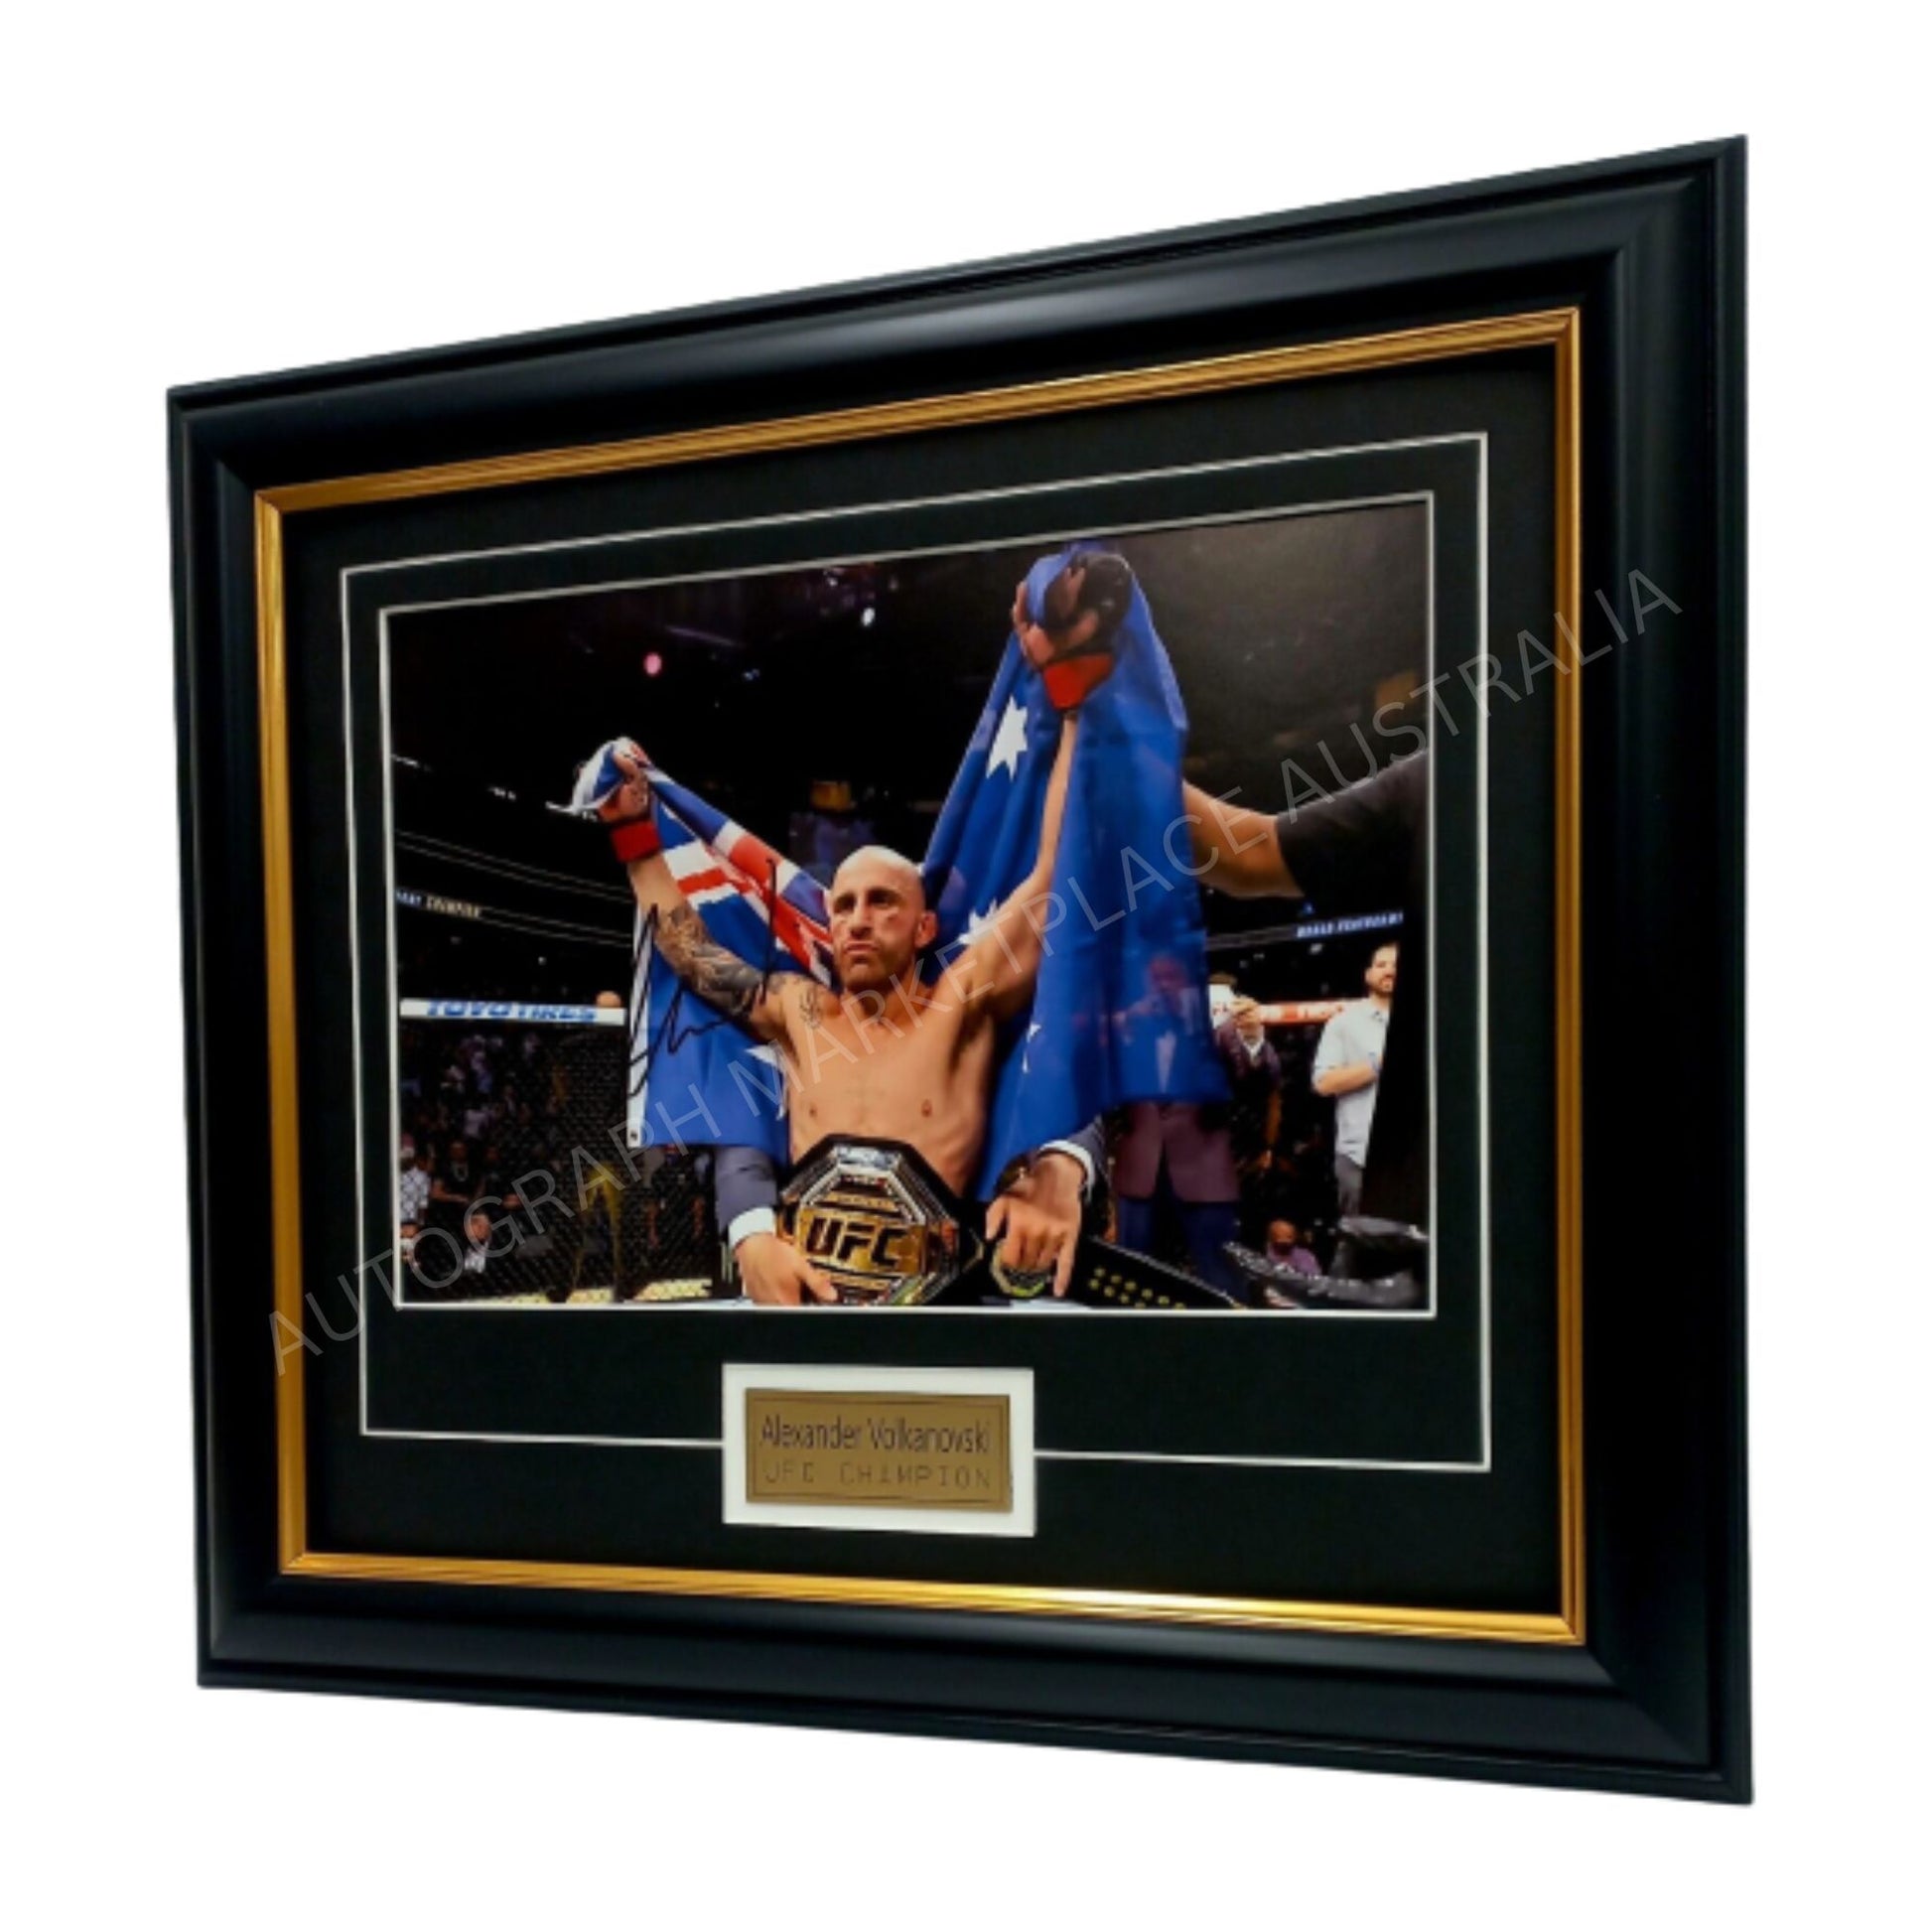  Framed Photo Memorabilia - UFC Featherweight Champion Alexander Volkanovski